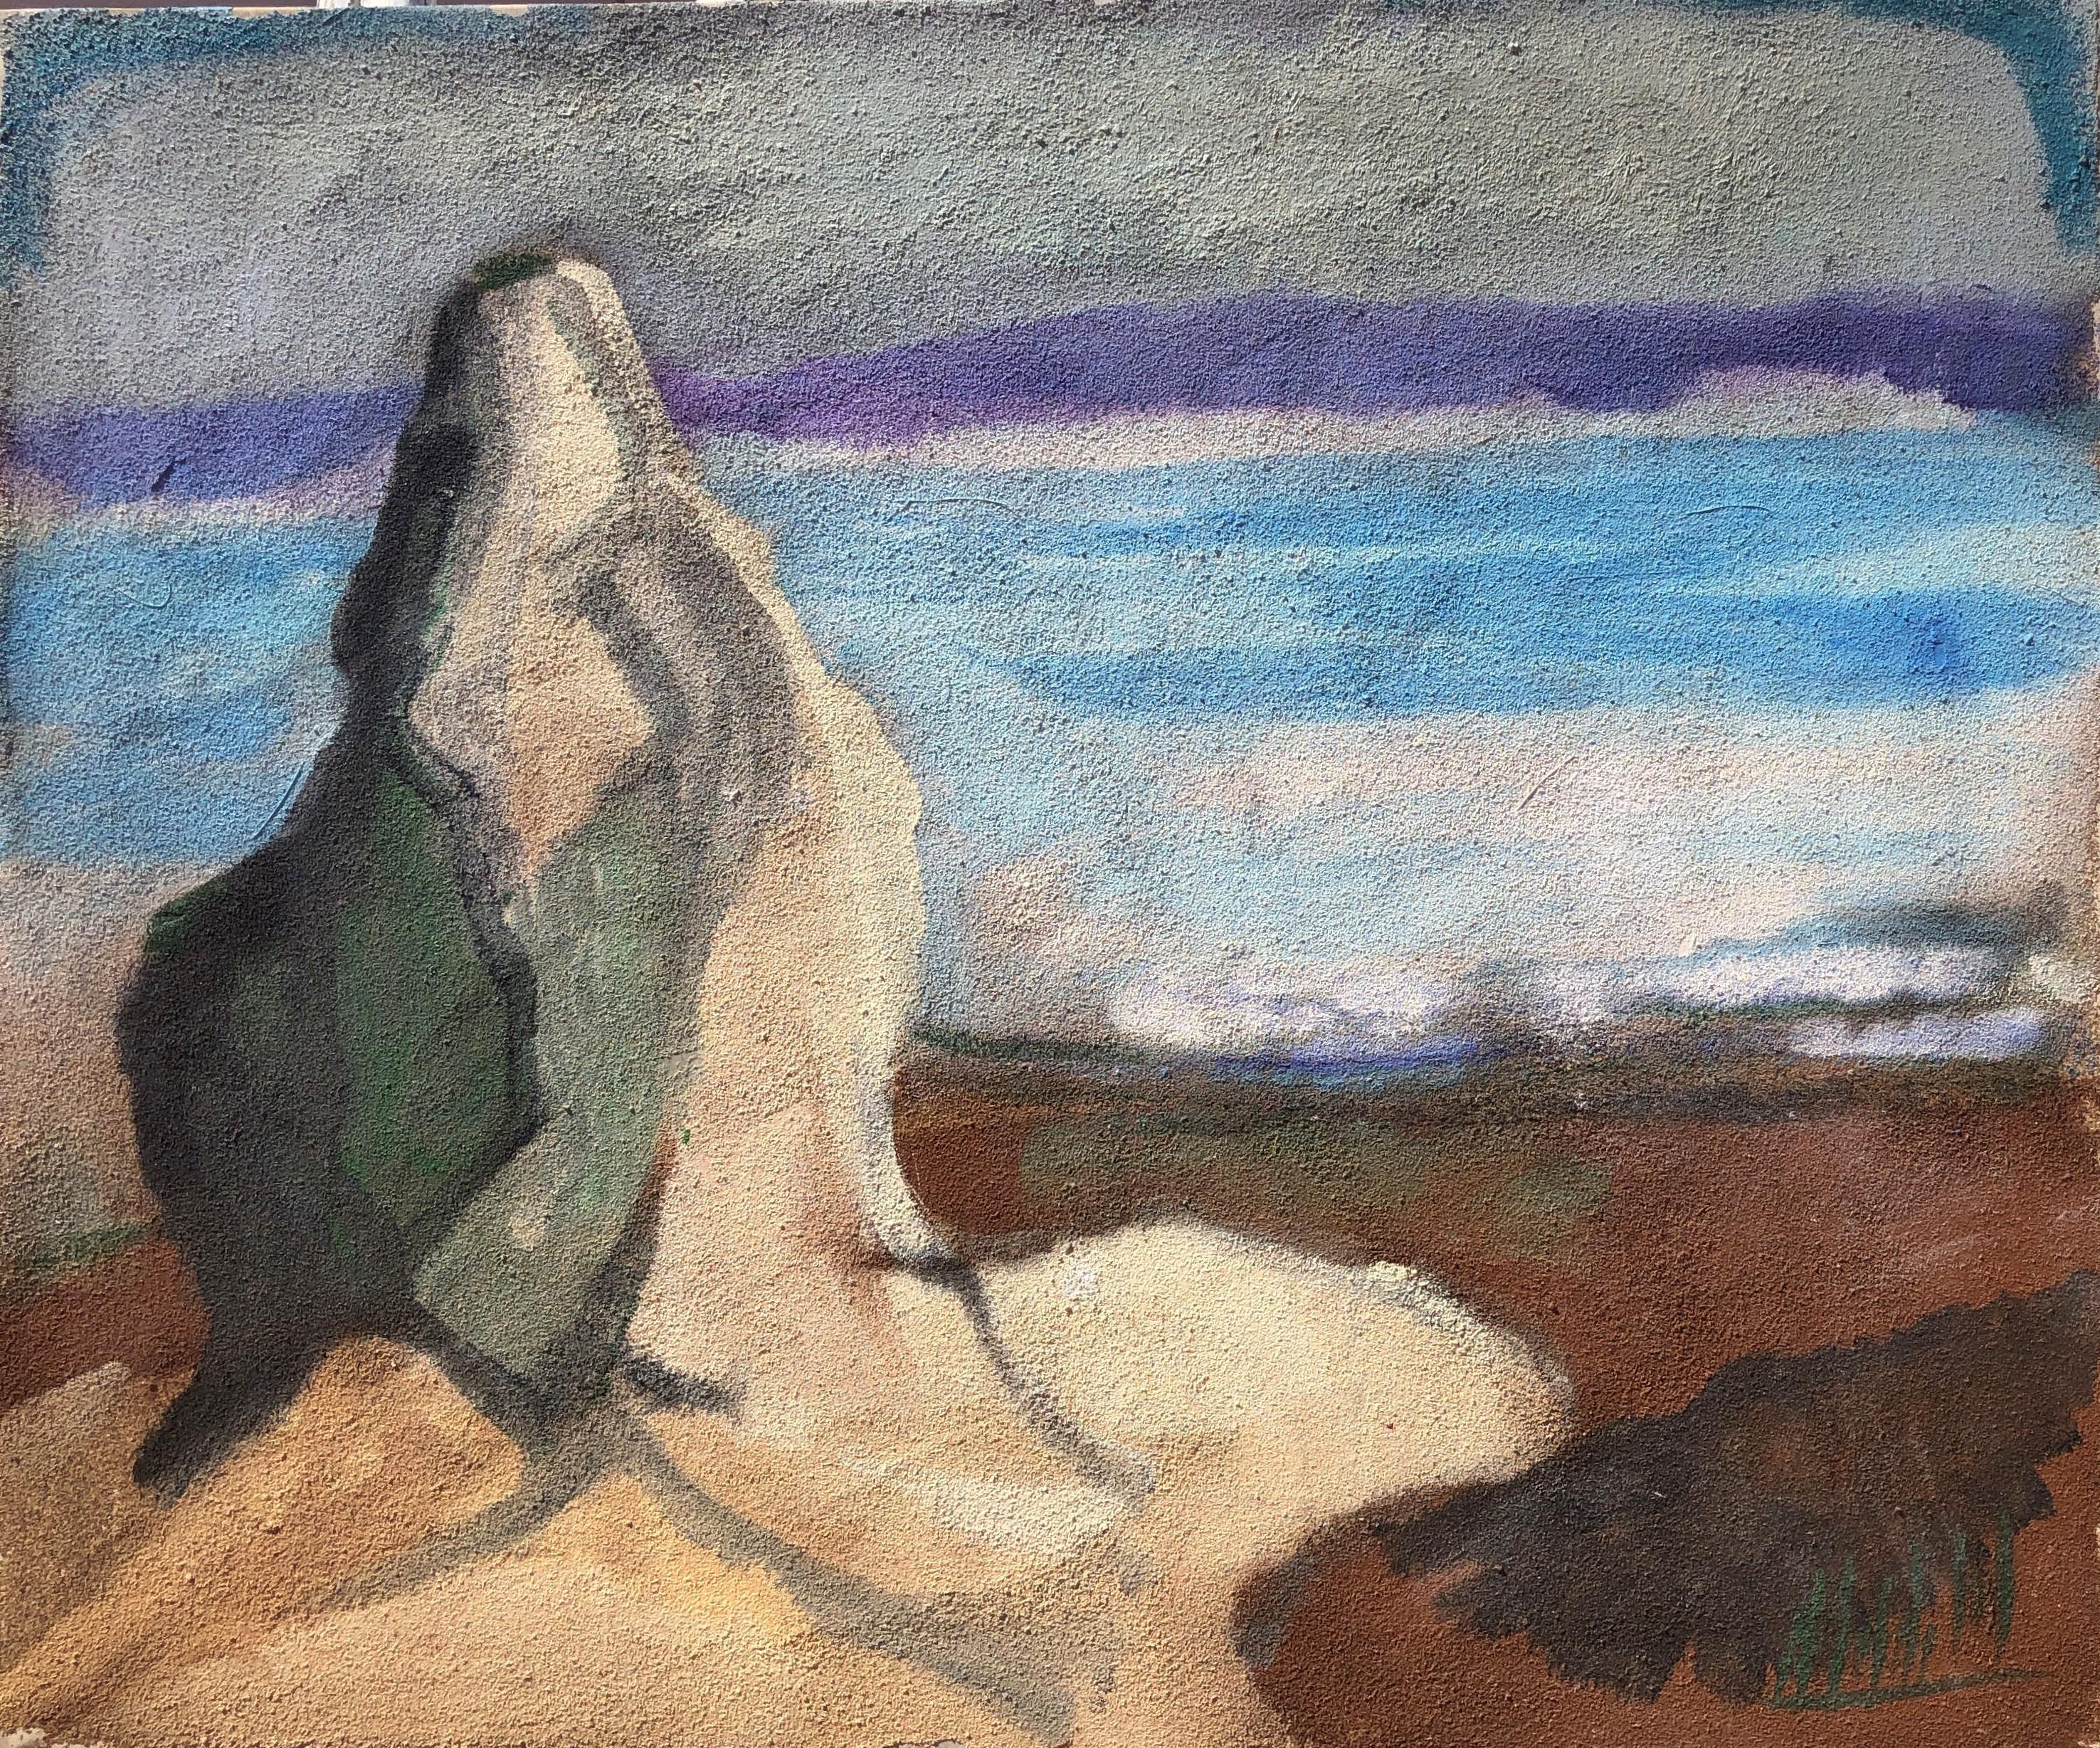 Manuel Capdevila Massana Landscape Painting - Lot's wife original oil and sand on canvas painting landscape